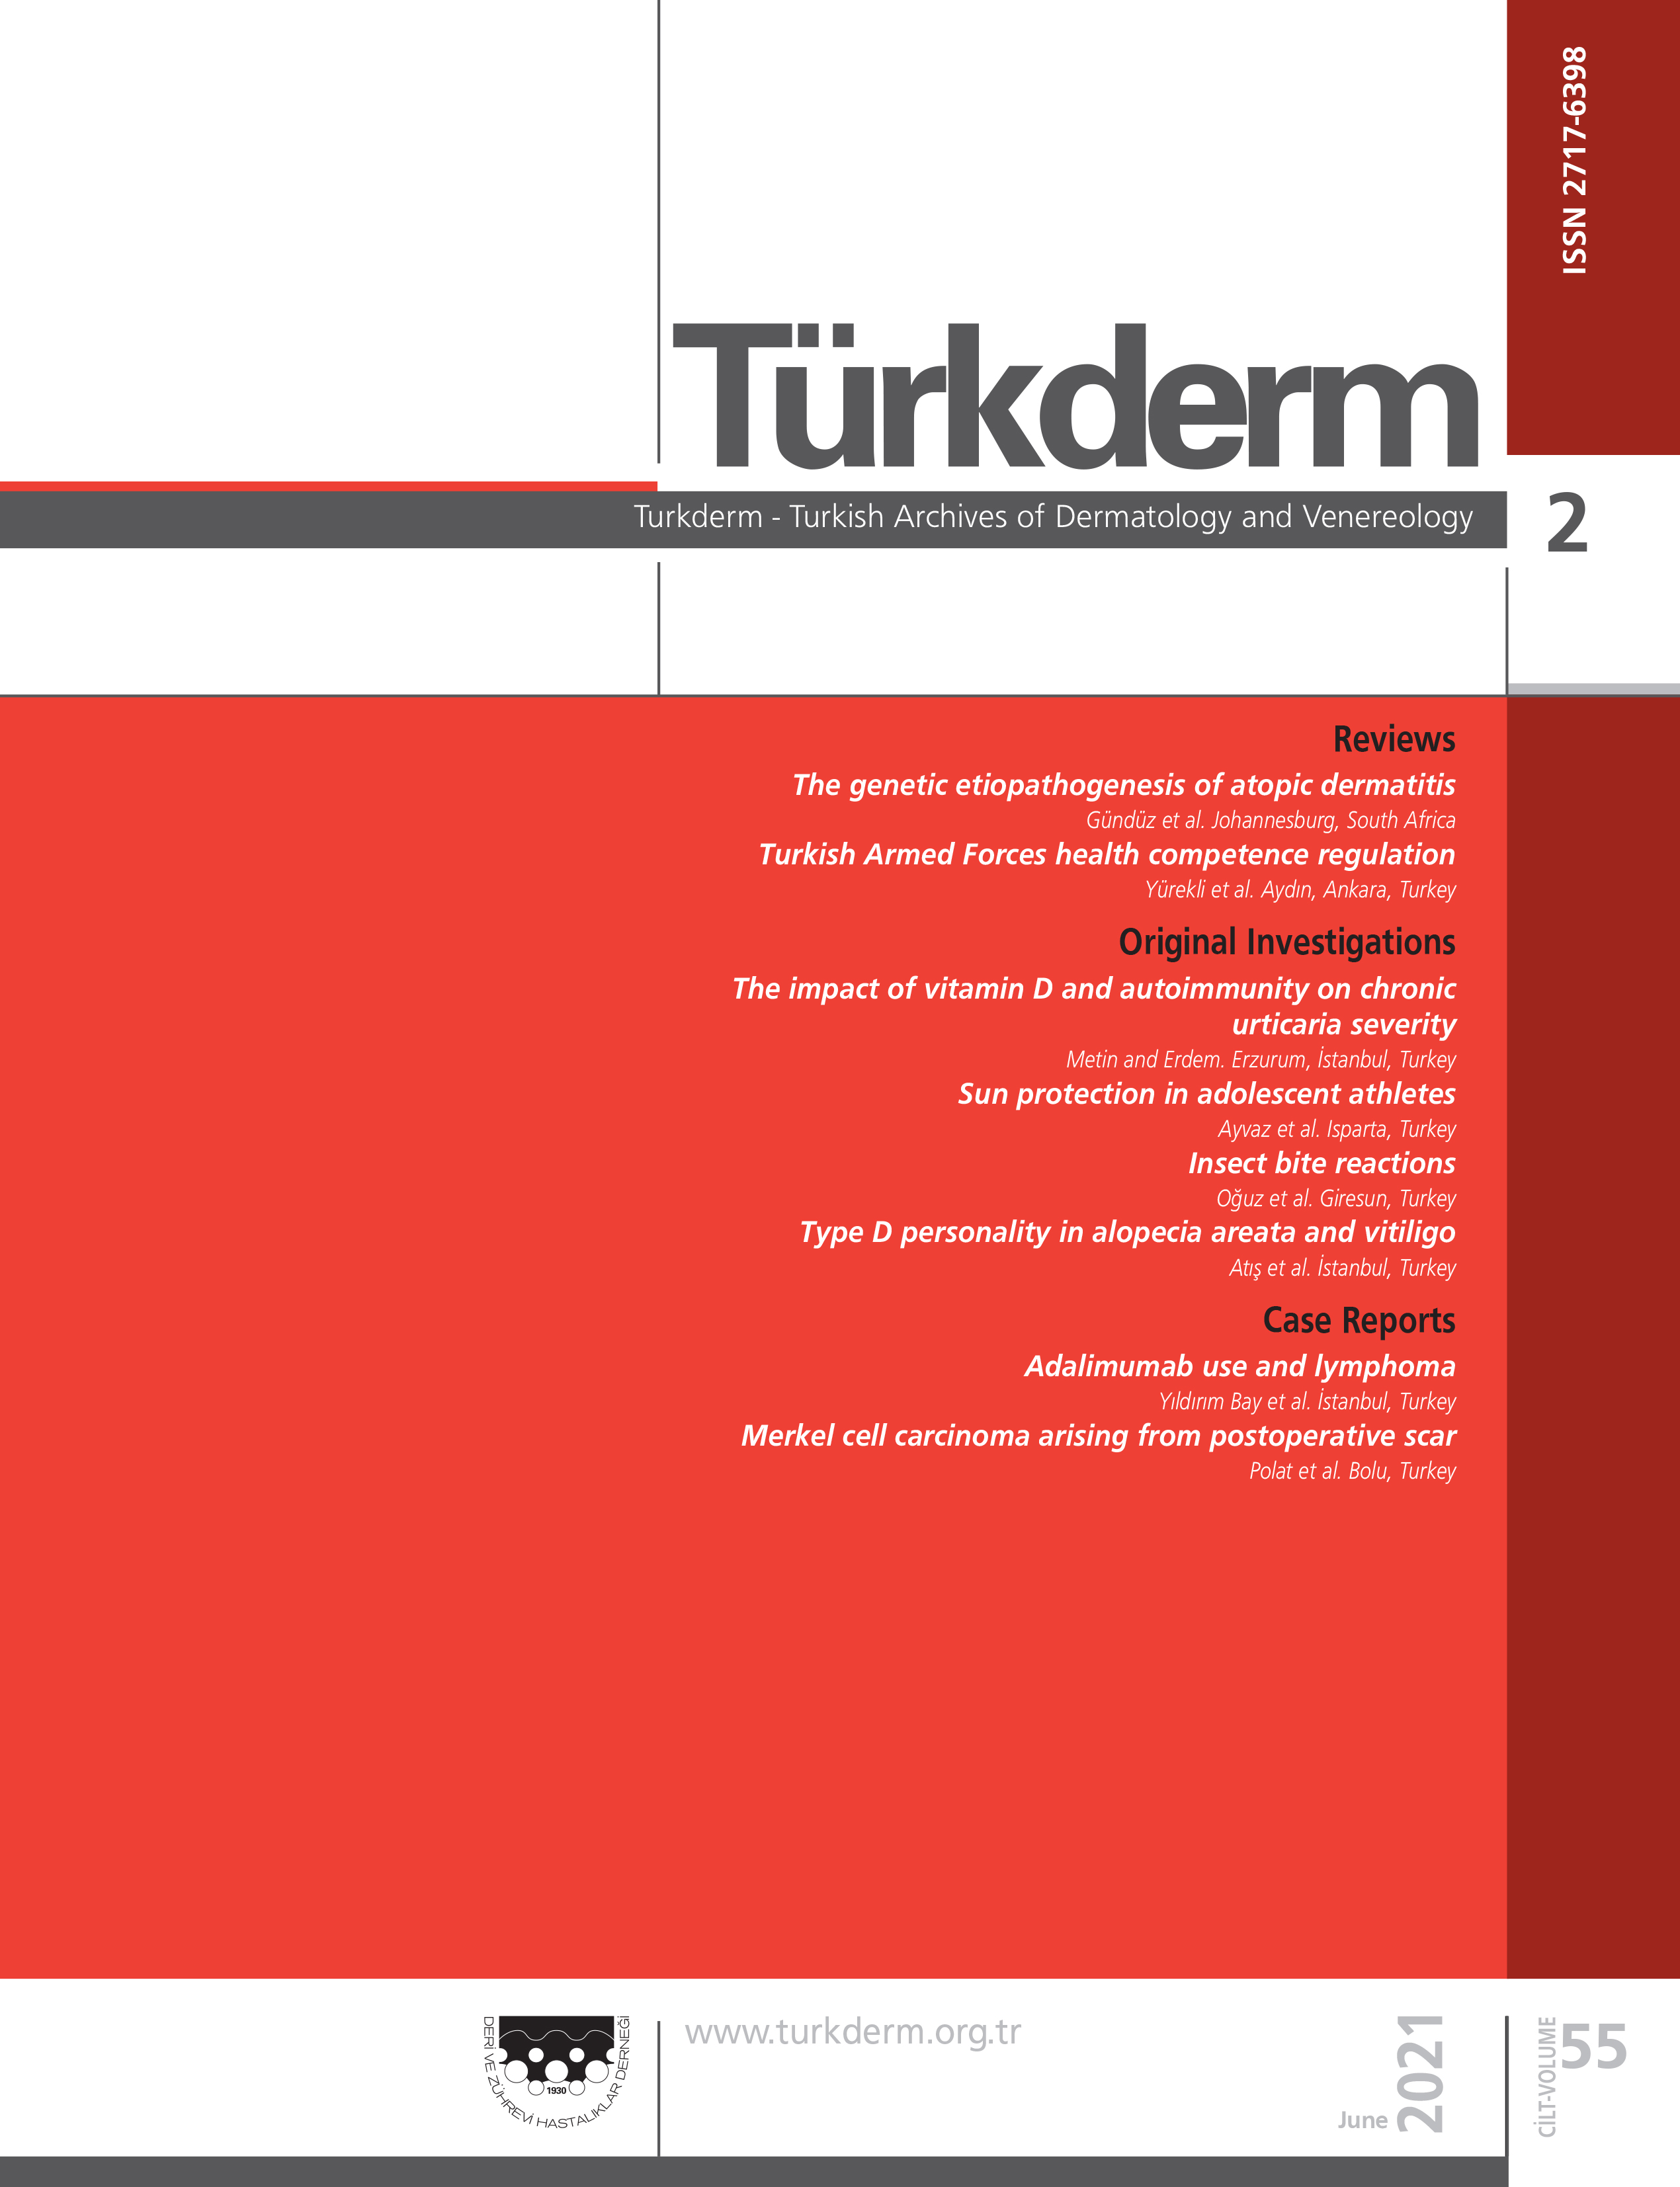 Turkderm - Turkish Archives of Dermatology and Venerology